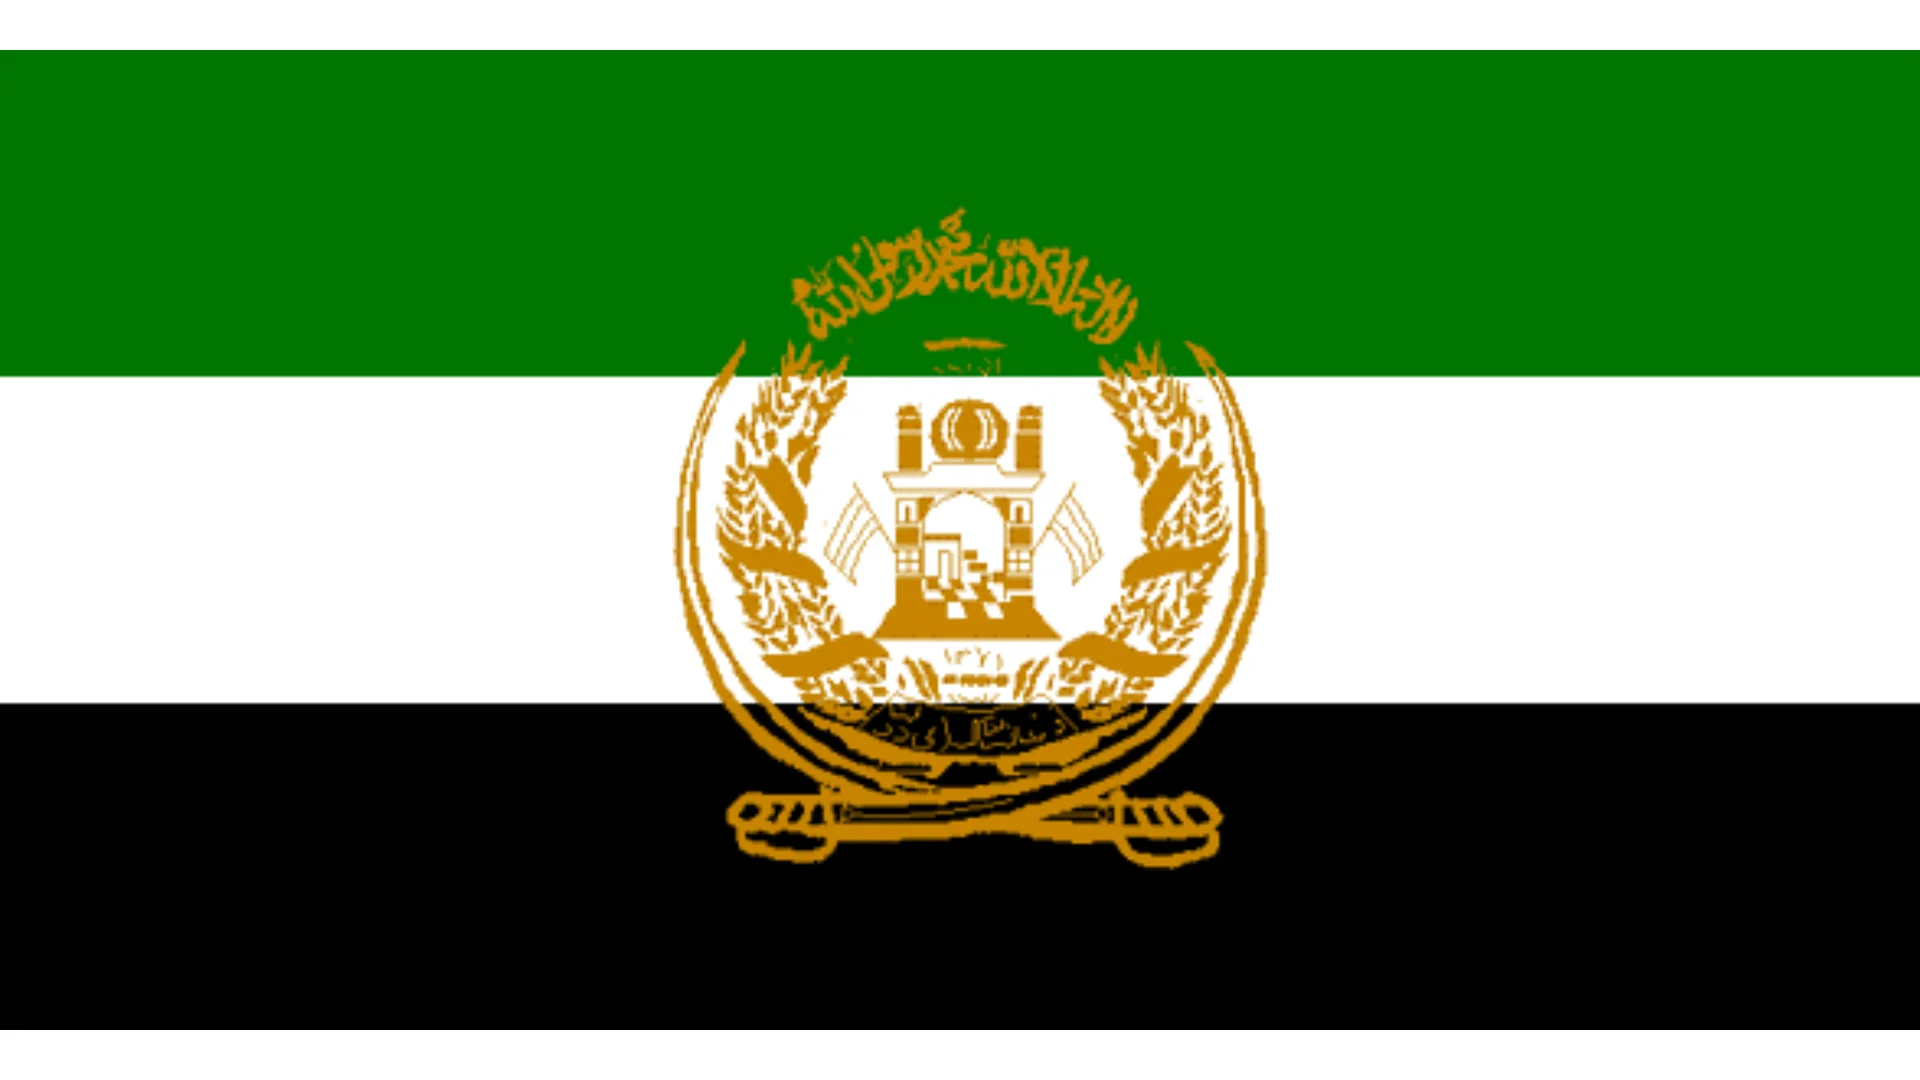 The image shows the state flag of Afghanistan during Burhanuddin Rabbani's presidency.